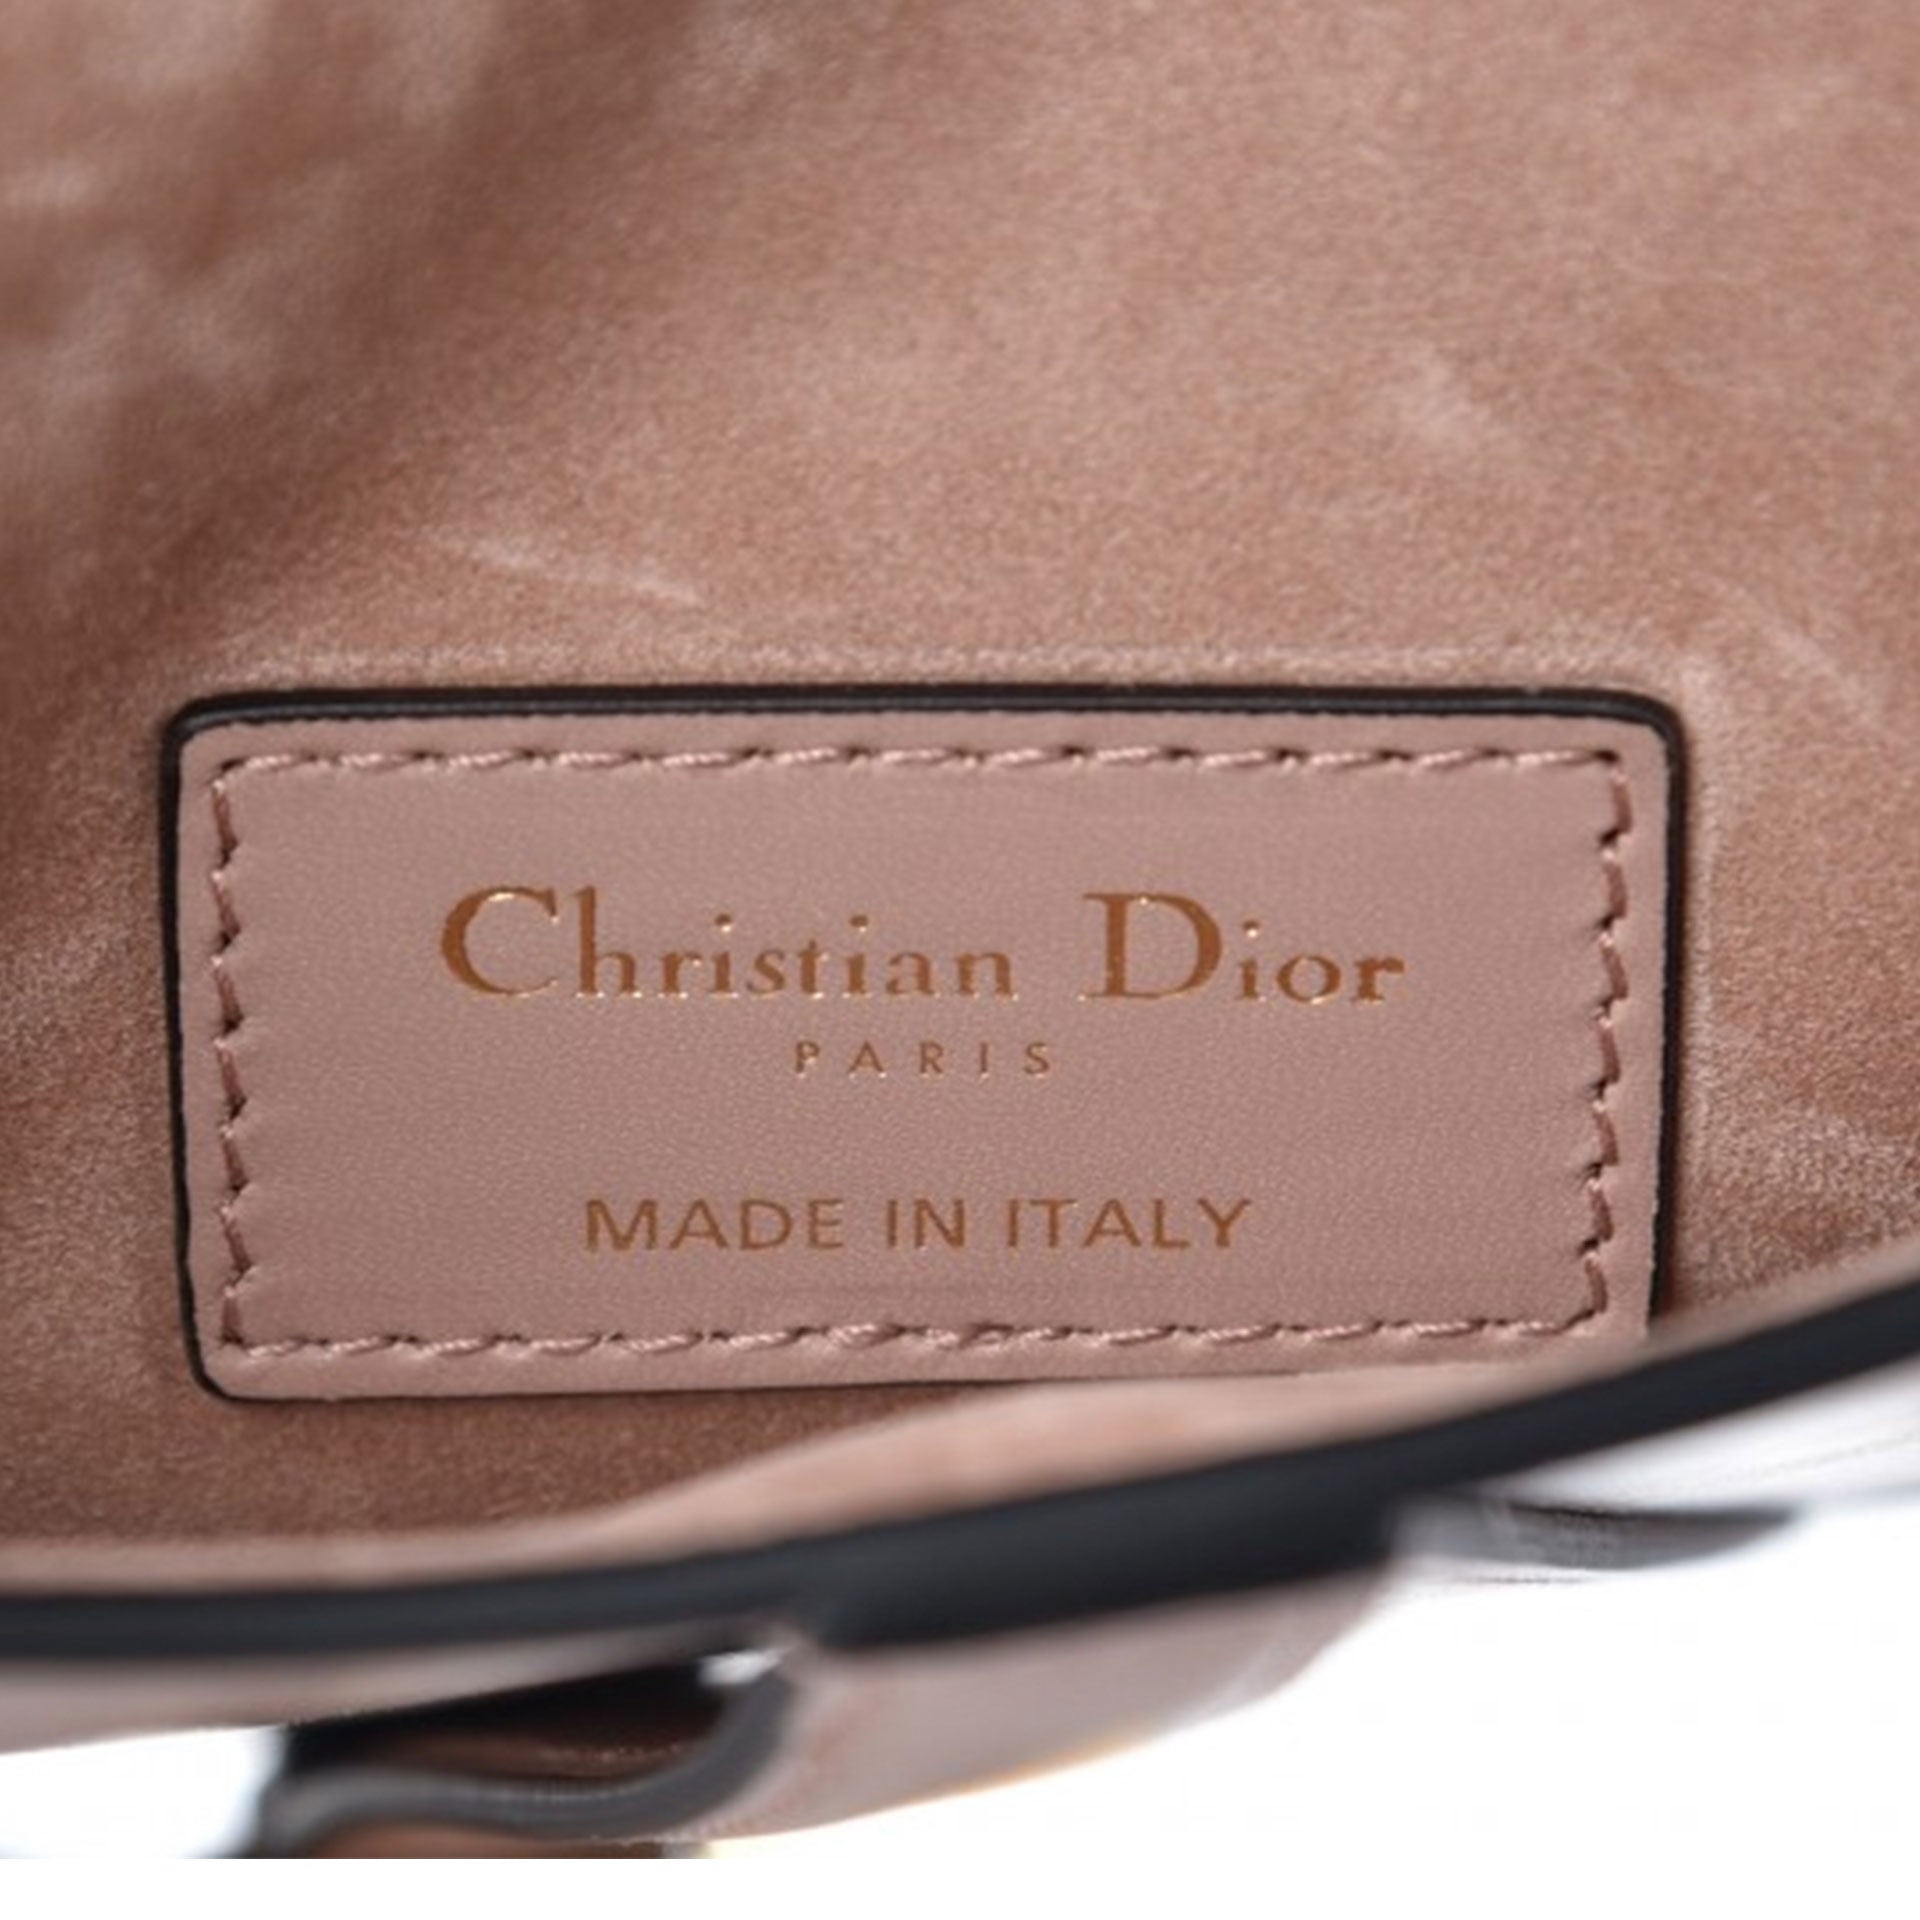 Christian Dior Waist Belt Saddle Fanny Pack Limited Edition Blush Beige Pink Leather Cross Body Bag